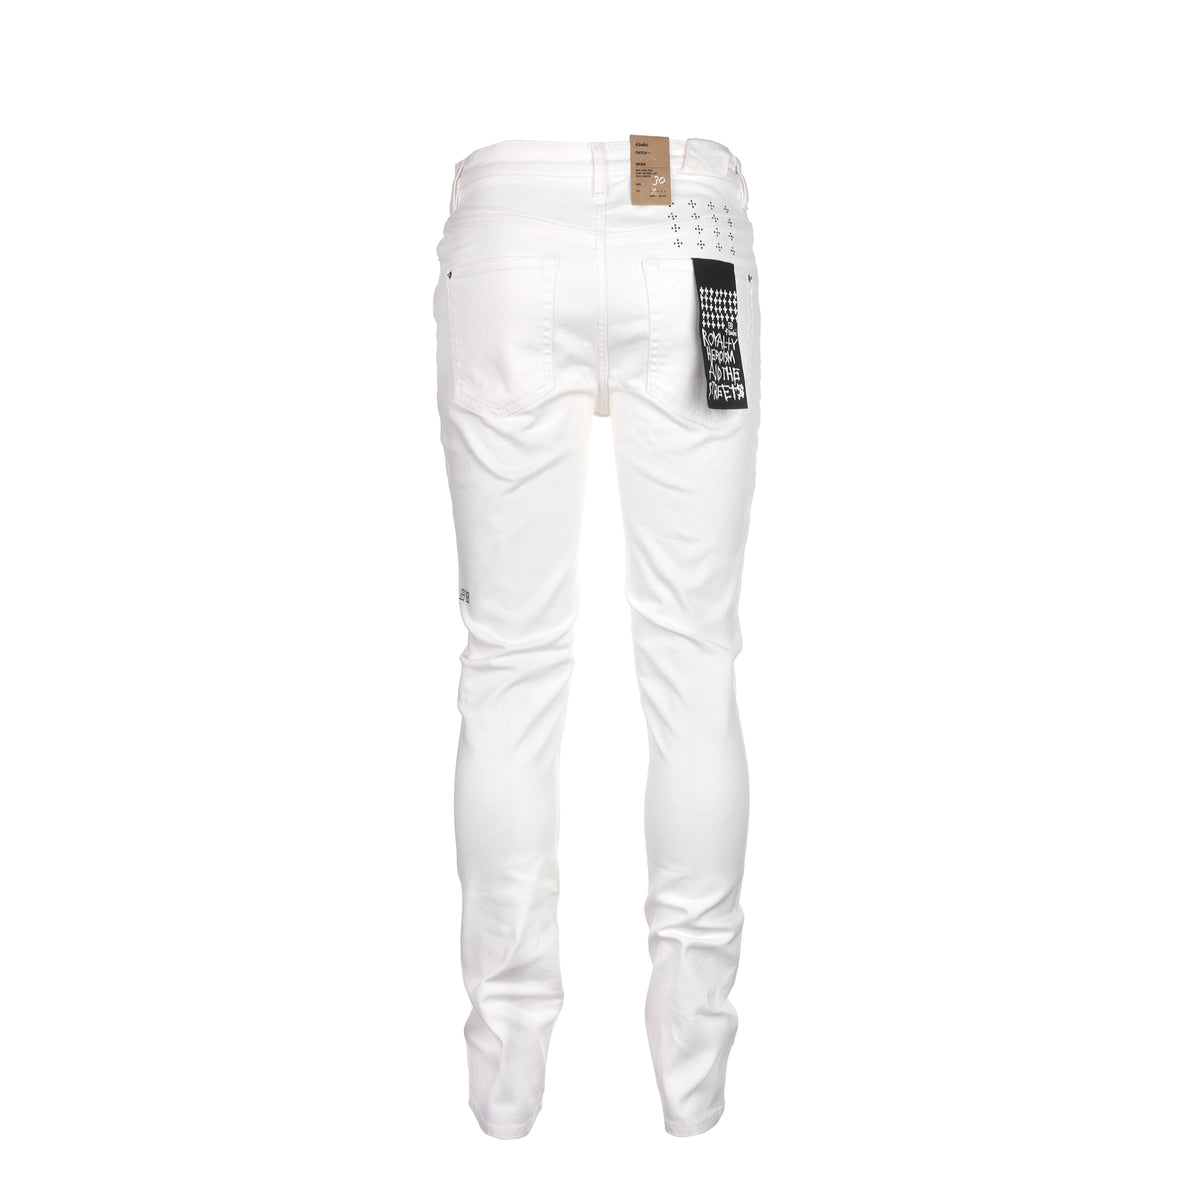 Ksubi Chitch Polar Krystal Men's White Jeans - SIZE Boutique